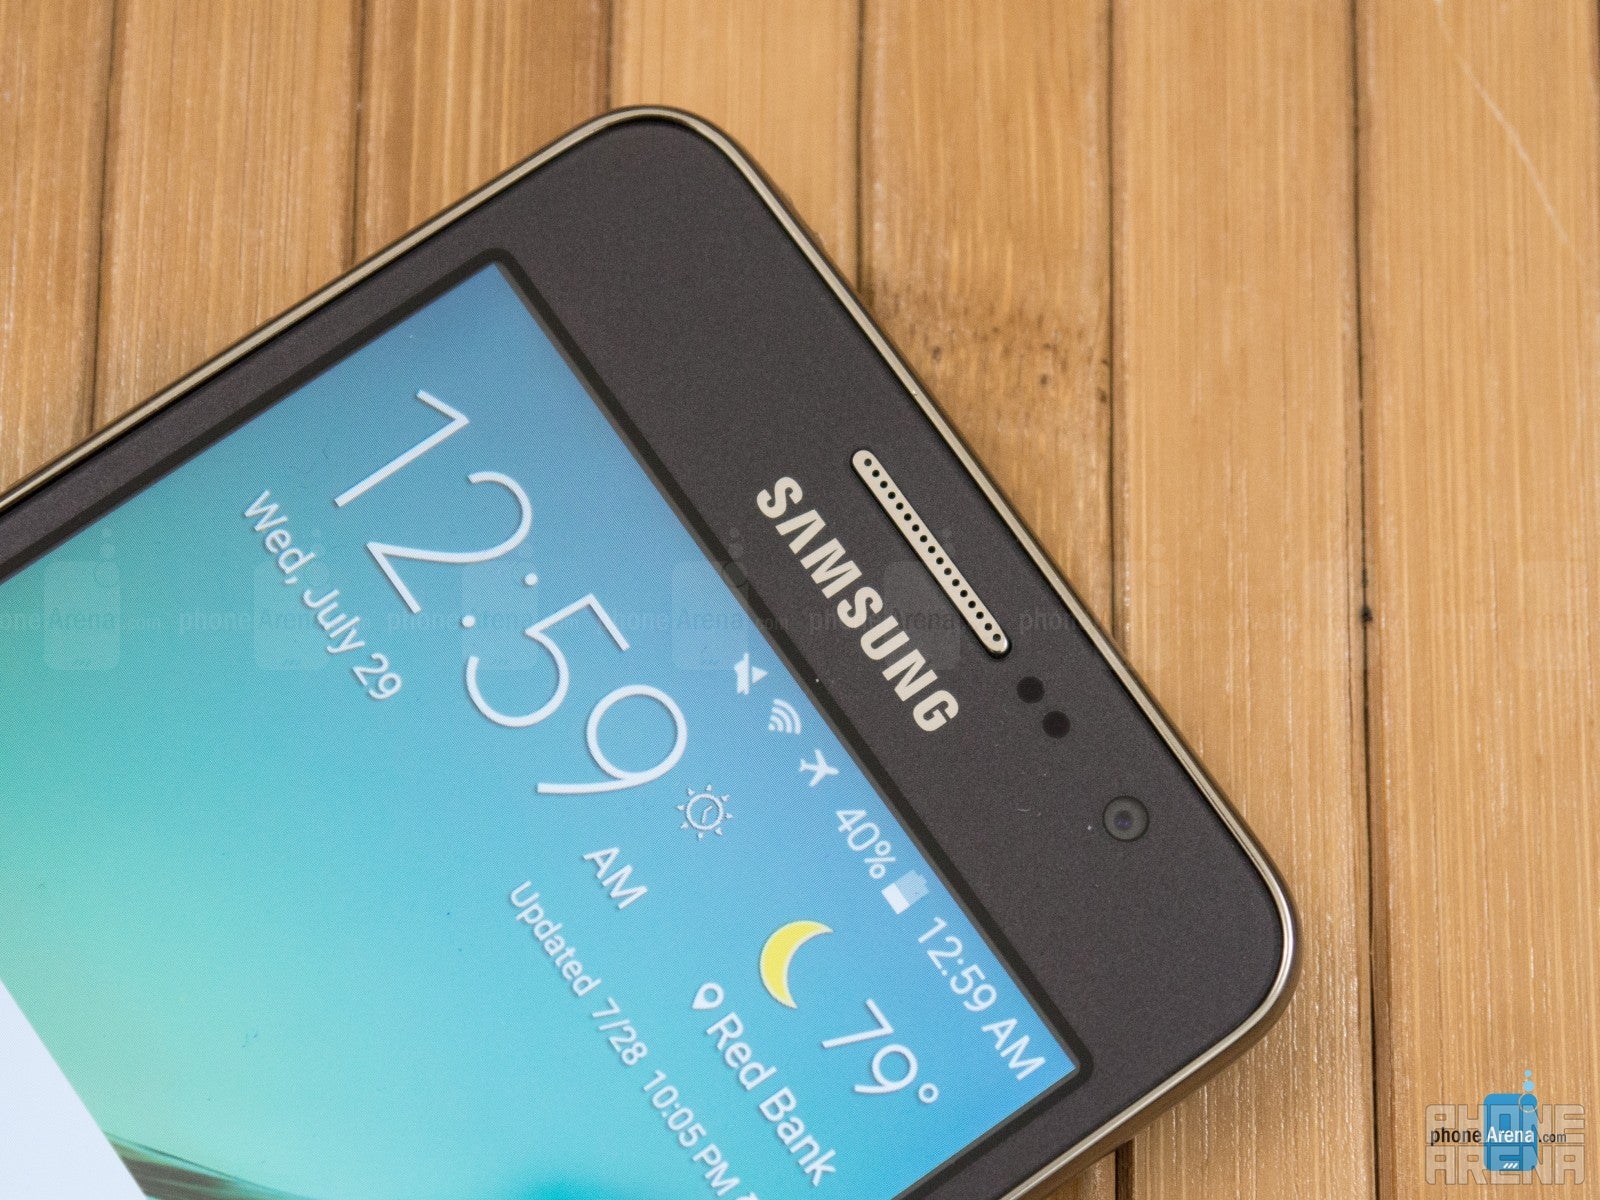 Samsung Galaxy Grand Prime Review